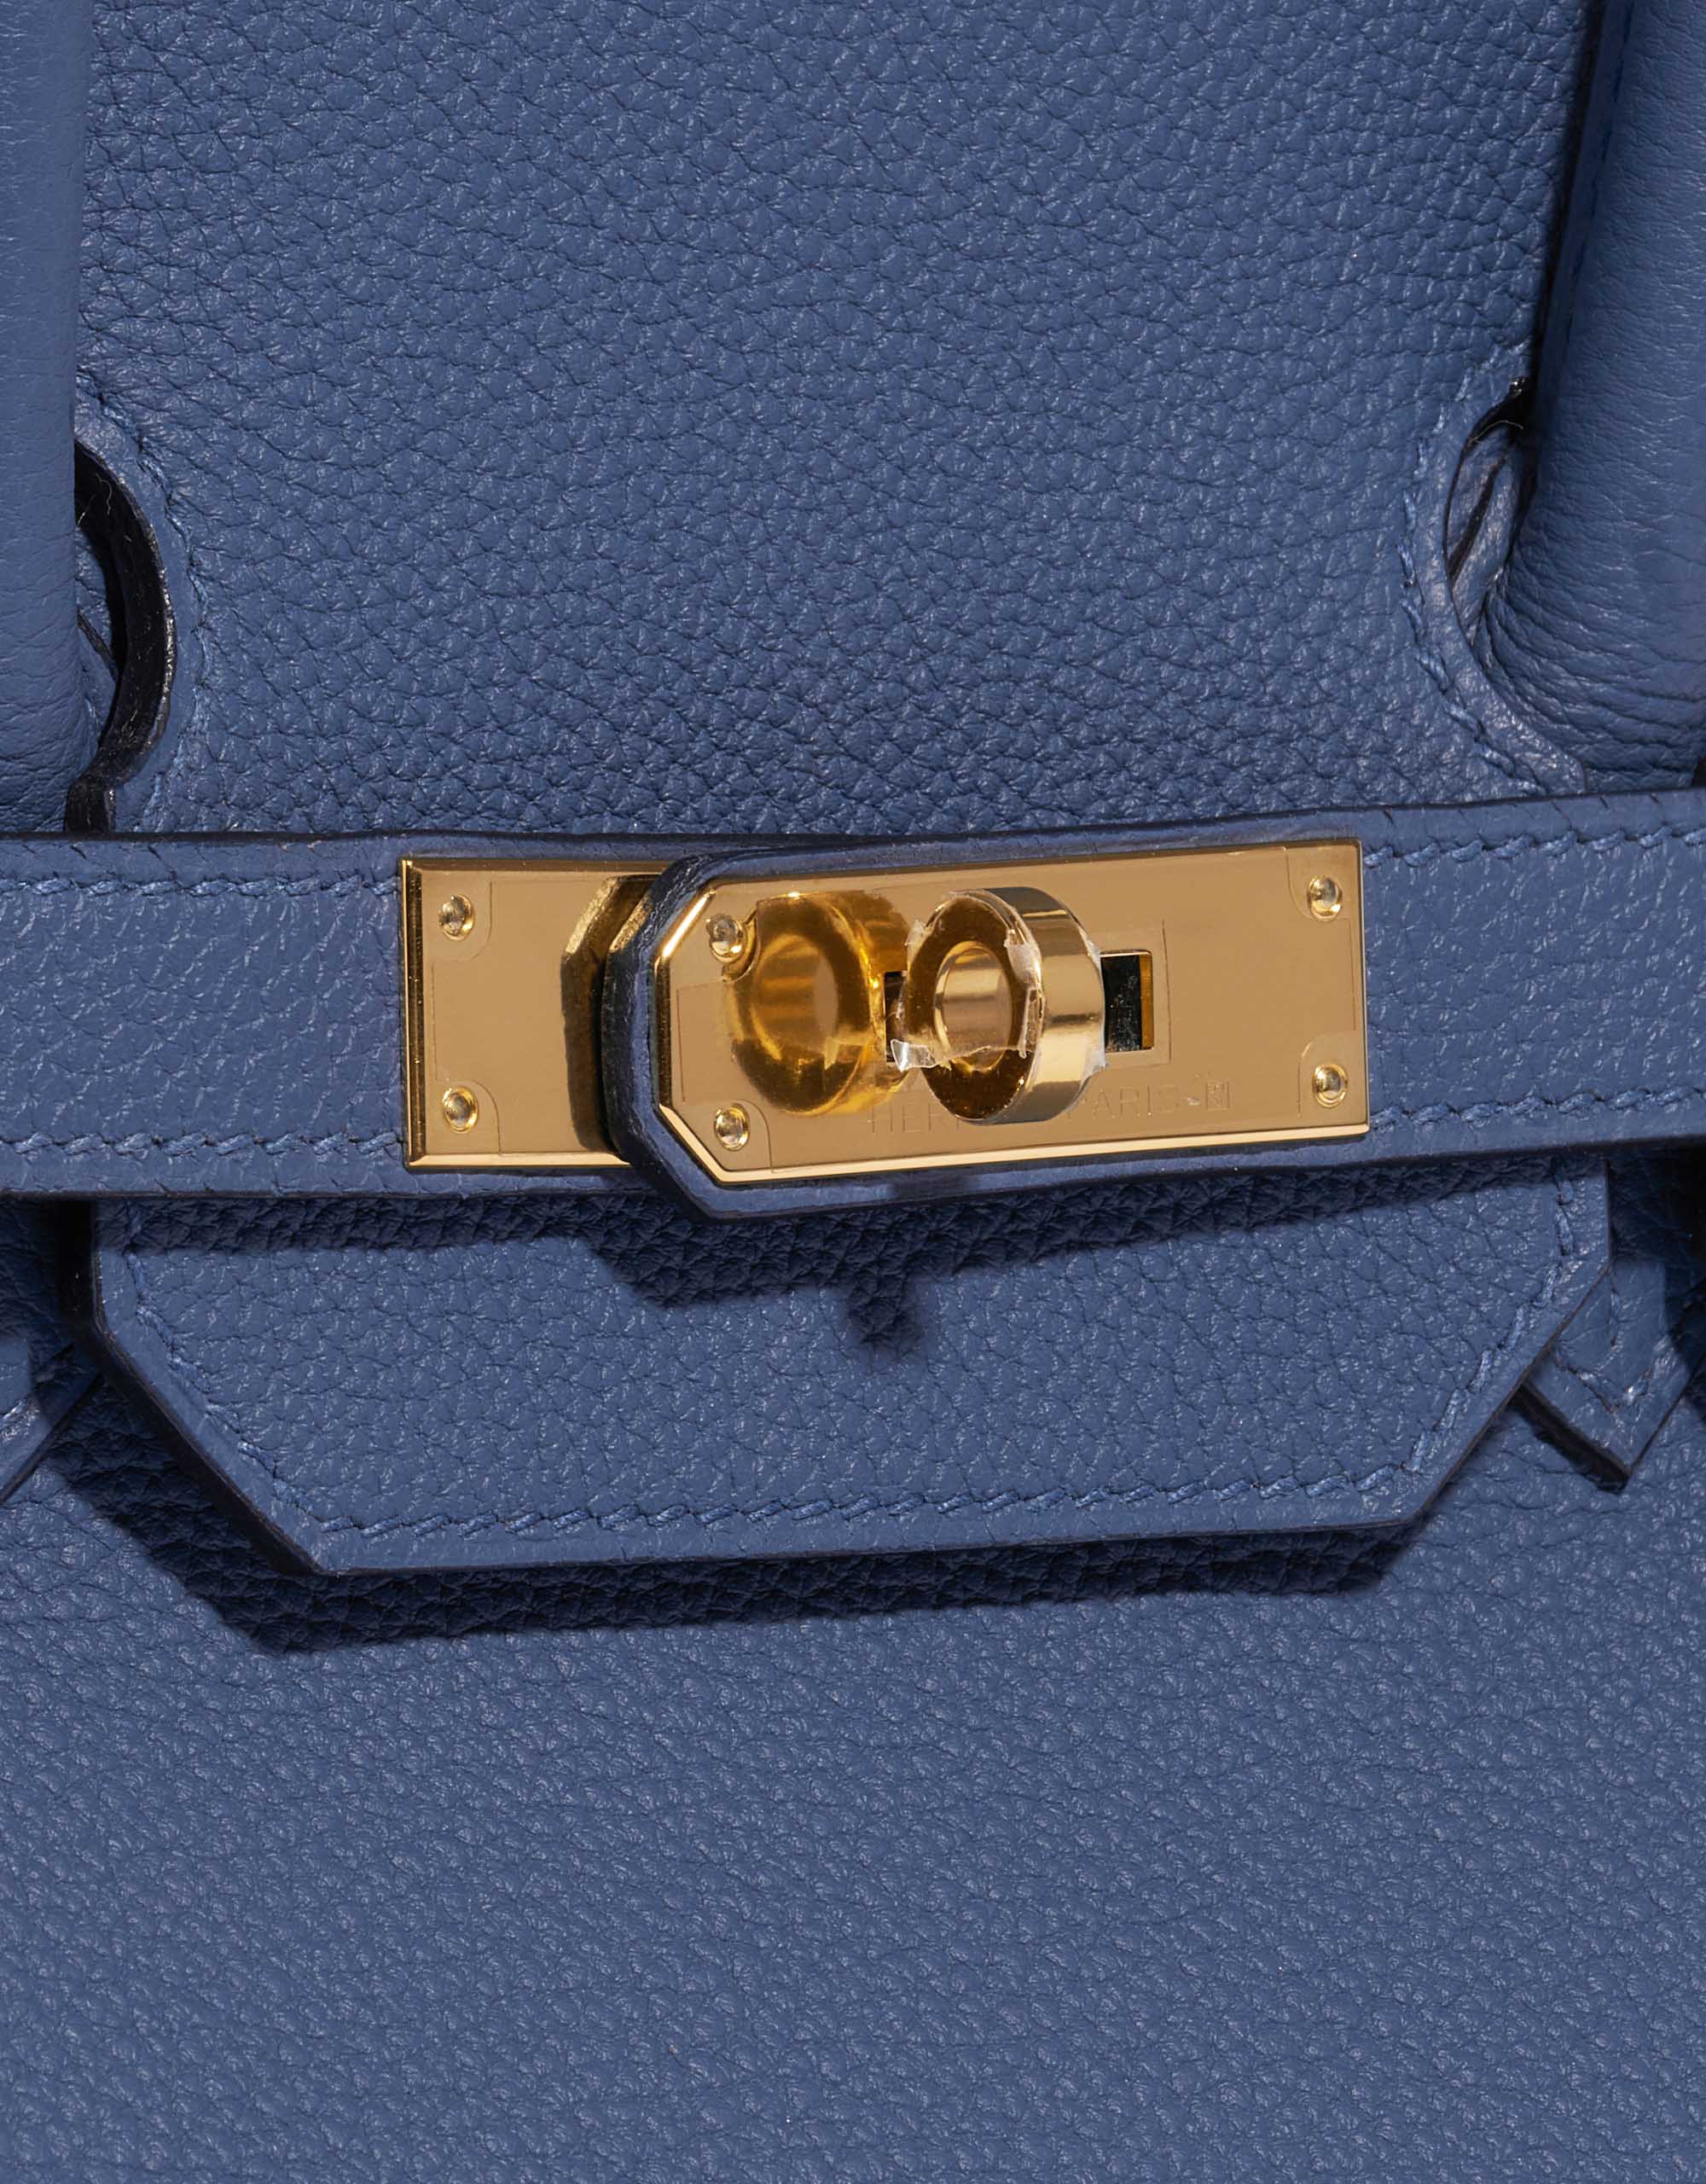 Hermès Blue Brighton Porosus Crocodile 35 cm Birkin Bag with